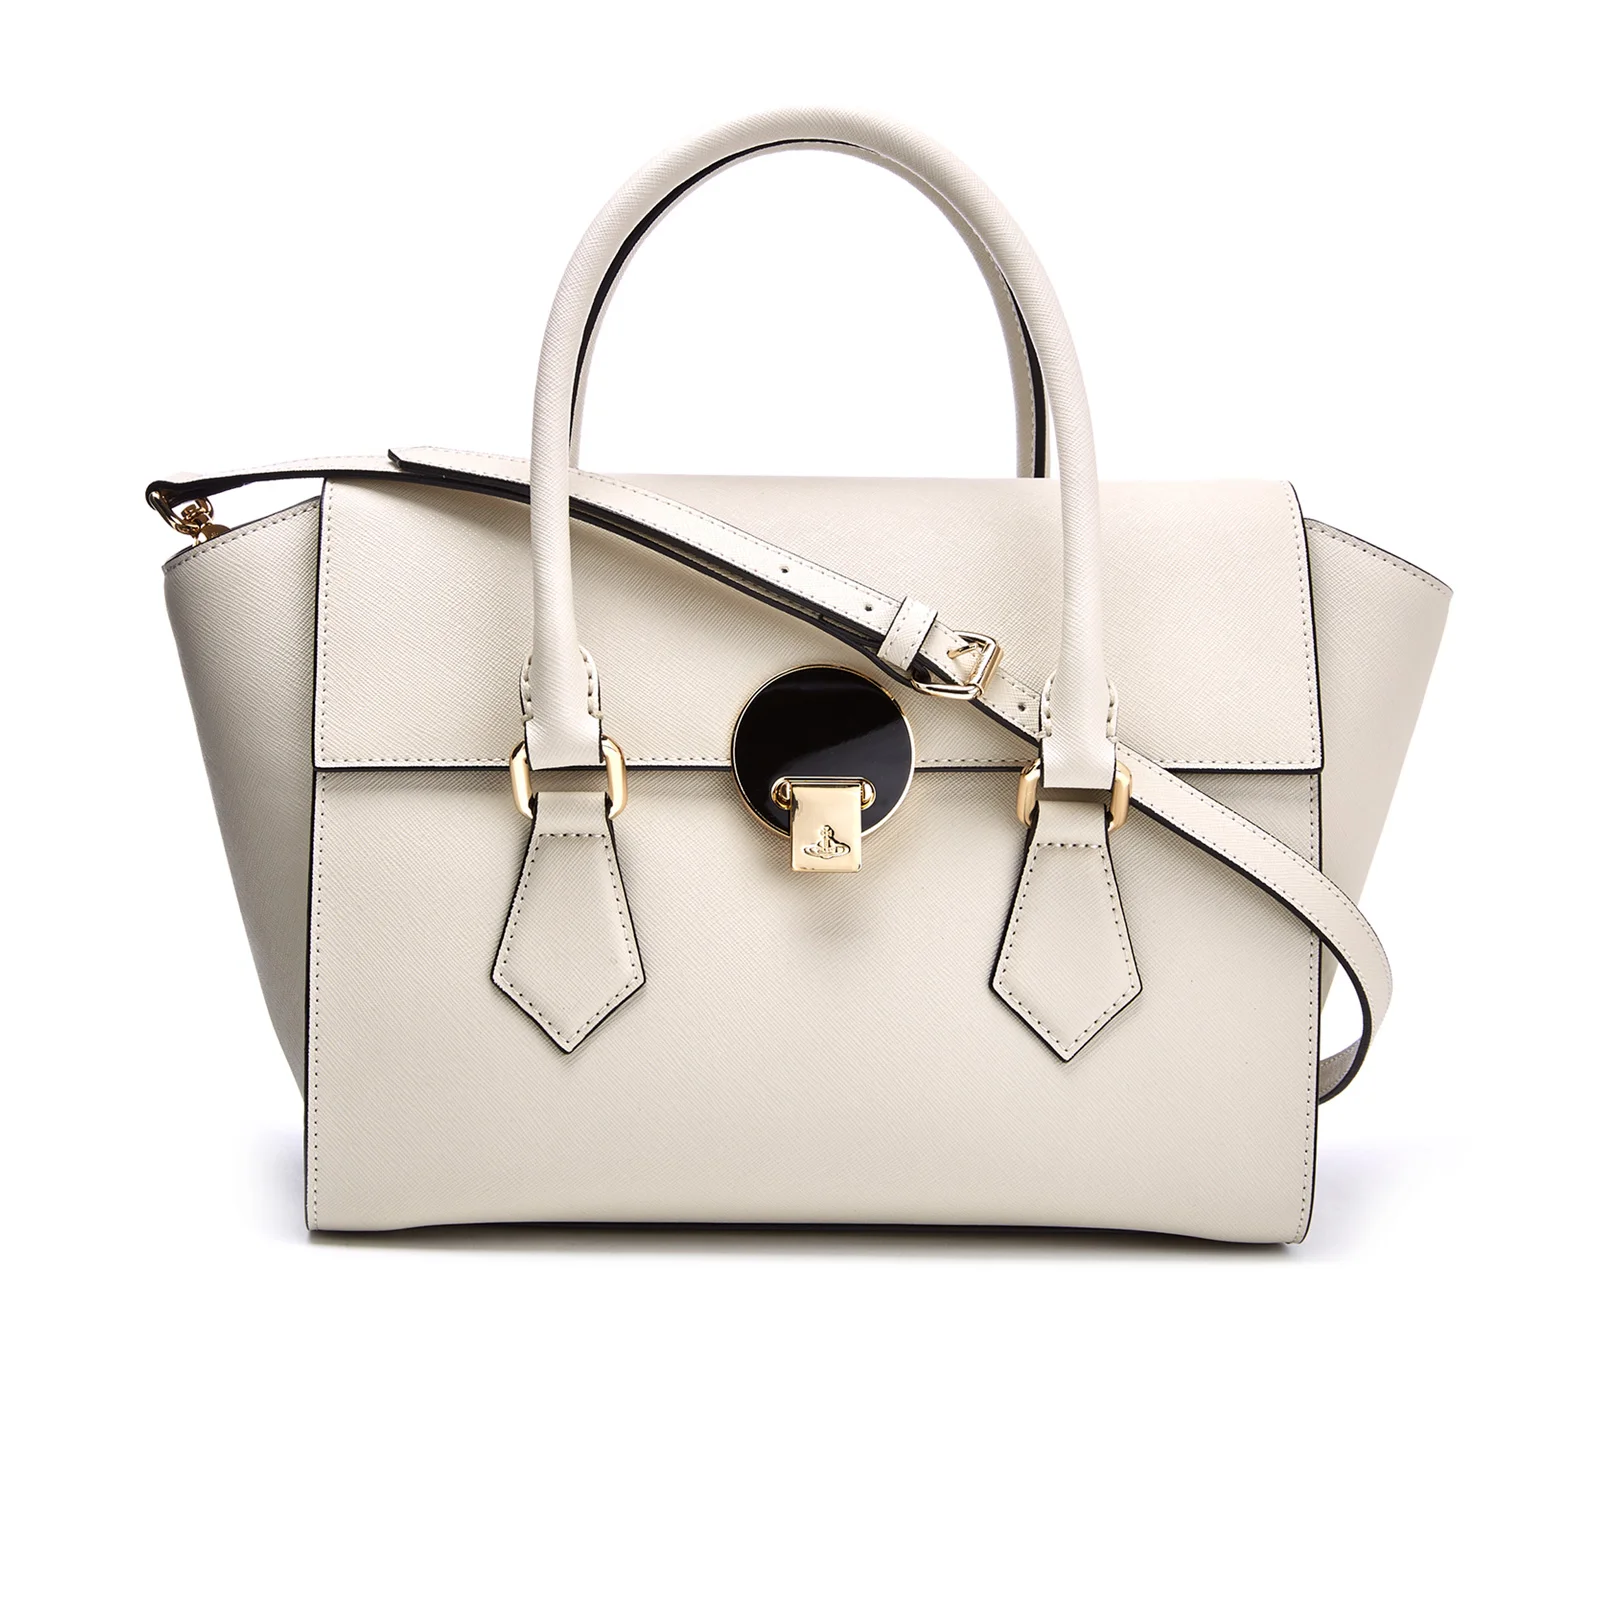 Vivienne Westwood Women's Opio Saffiano Leather Handbag - Beige Image 1